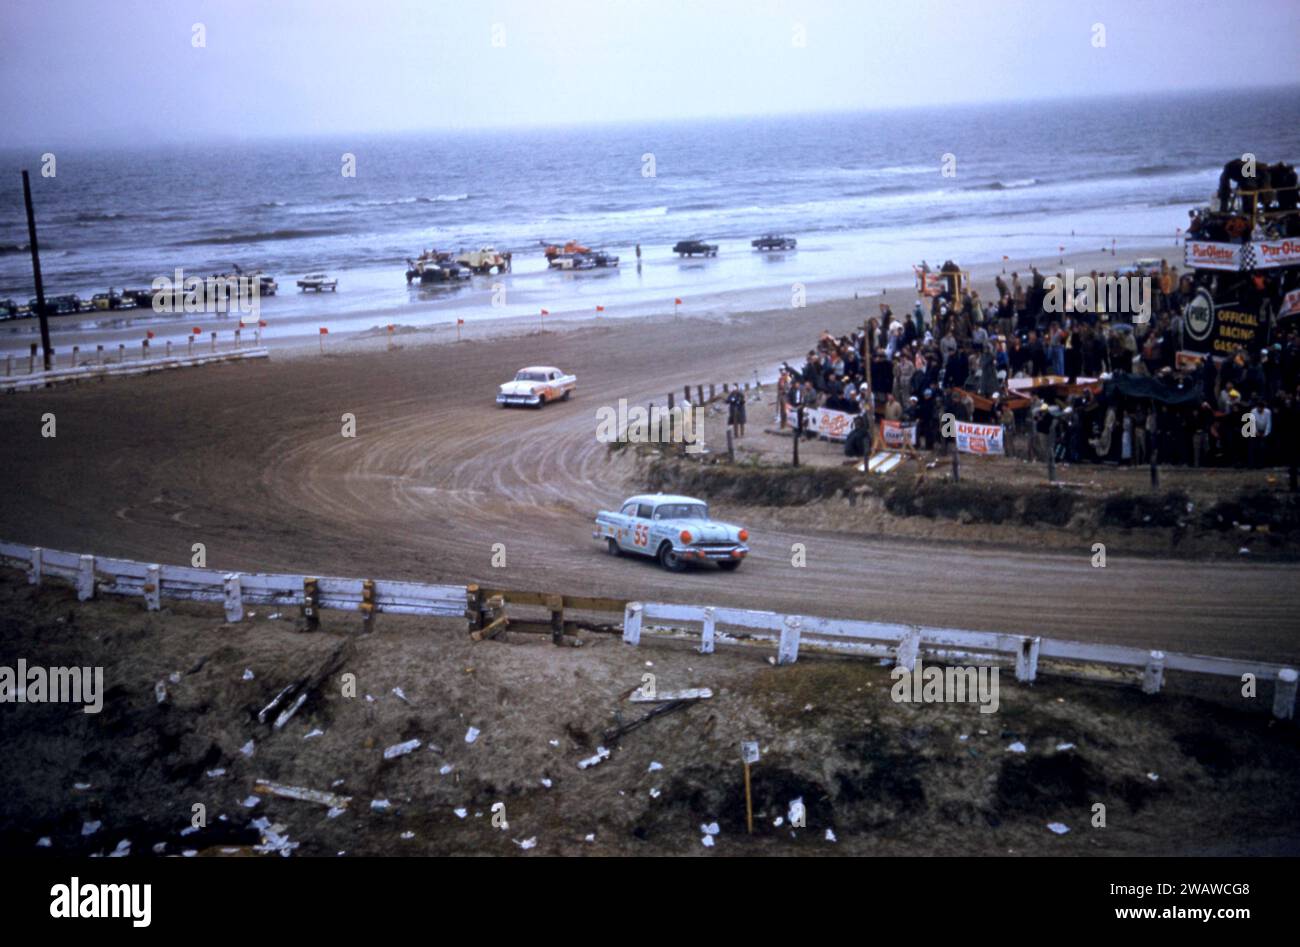 DAYTONA BEACH, FL - FEBRUARY 26: Junior Johnson in the #55 Pontiac races around the corner during the 1956 NASCAR Daytona Beach and Road Course race on February 26, 1956 in Daytona Beach, Florida. (Photo by Hy Peskin) *** Local Caption *** Junior Johnson Stock Photo